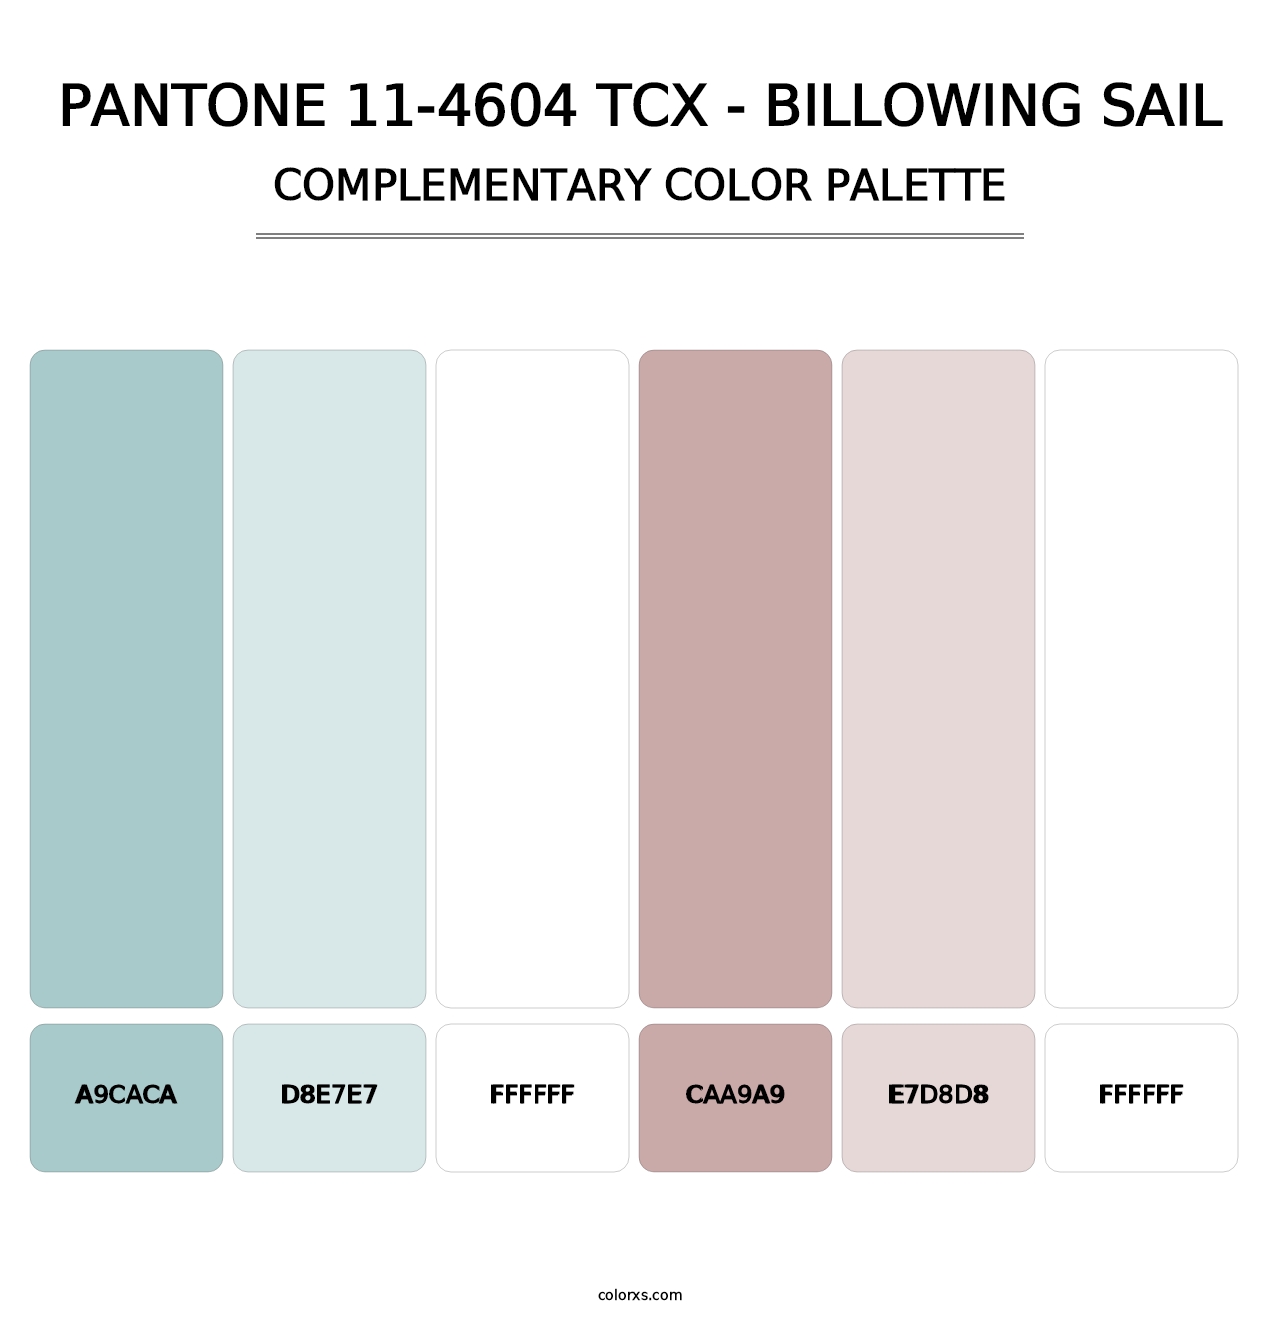 PANTONE 11-4604 TCX - Billowing Sail - Complementary Color Palette